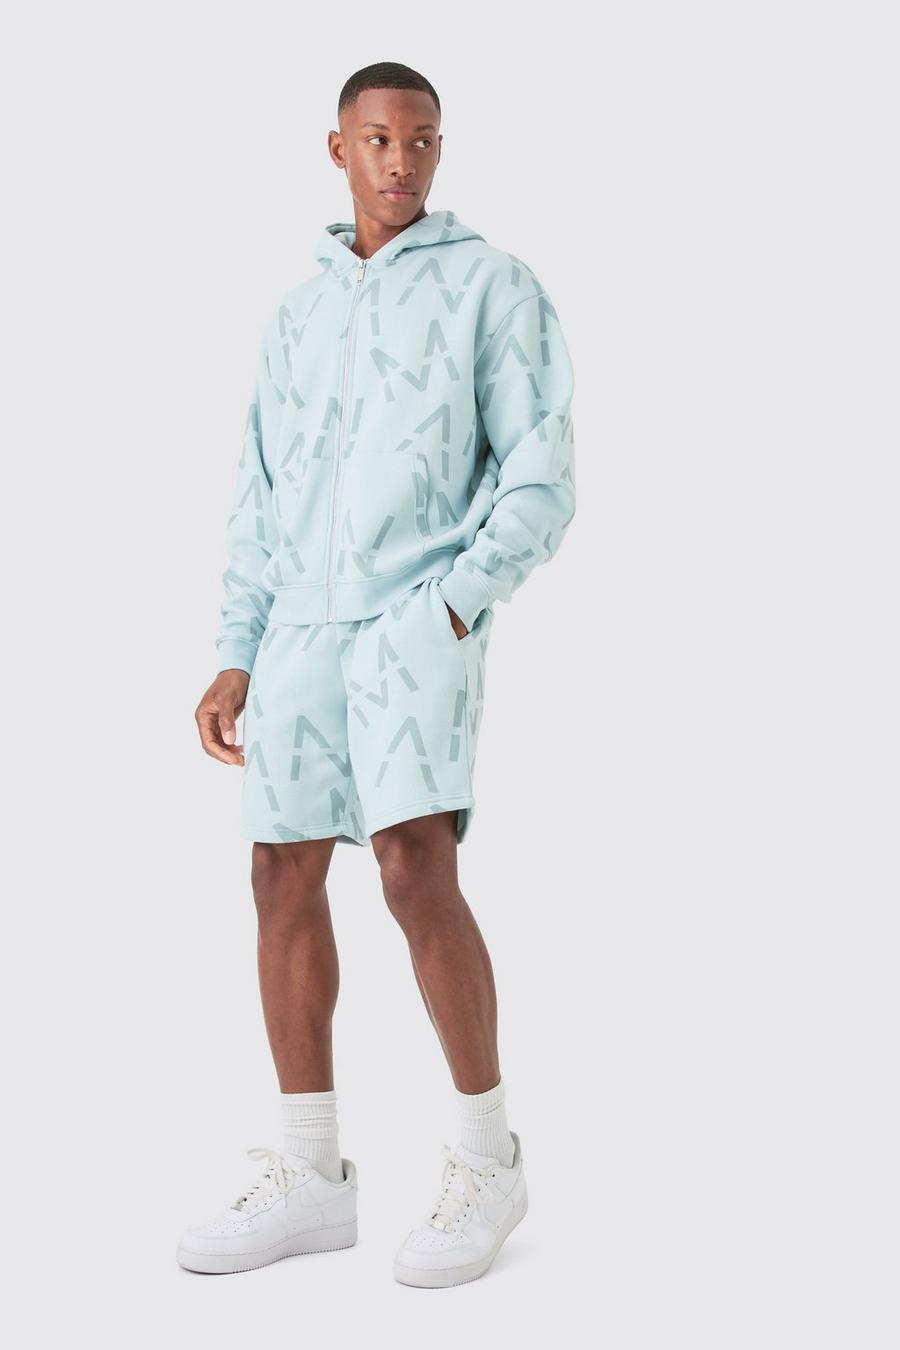 Kurzer kastiger Man Hoodie-Trainingsanzug mit Print und Reißverschluss, Light blue